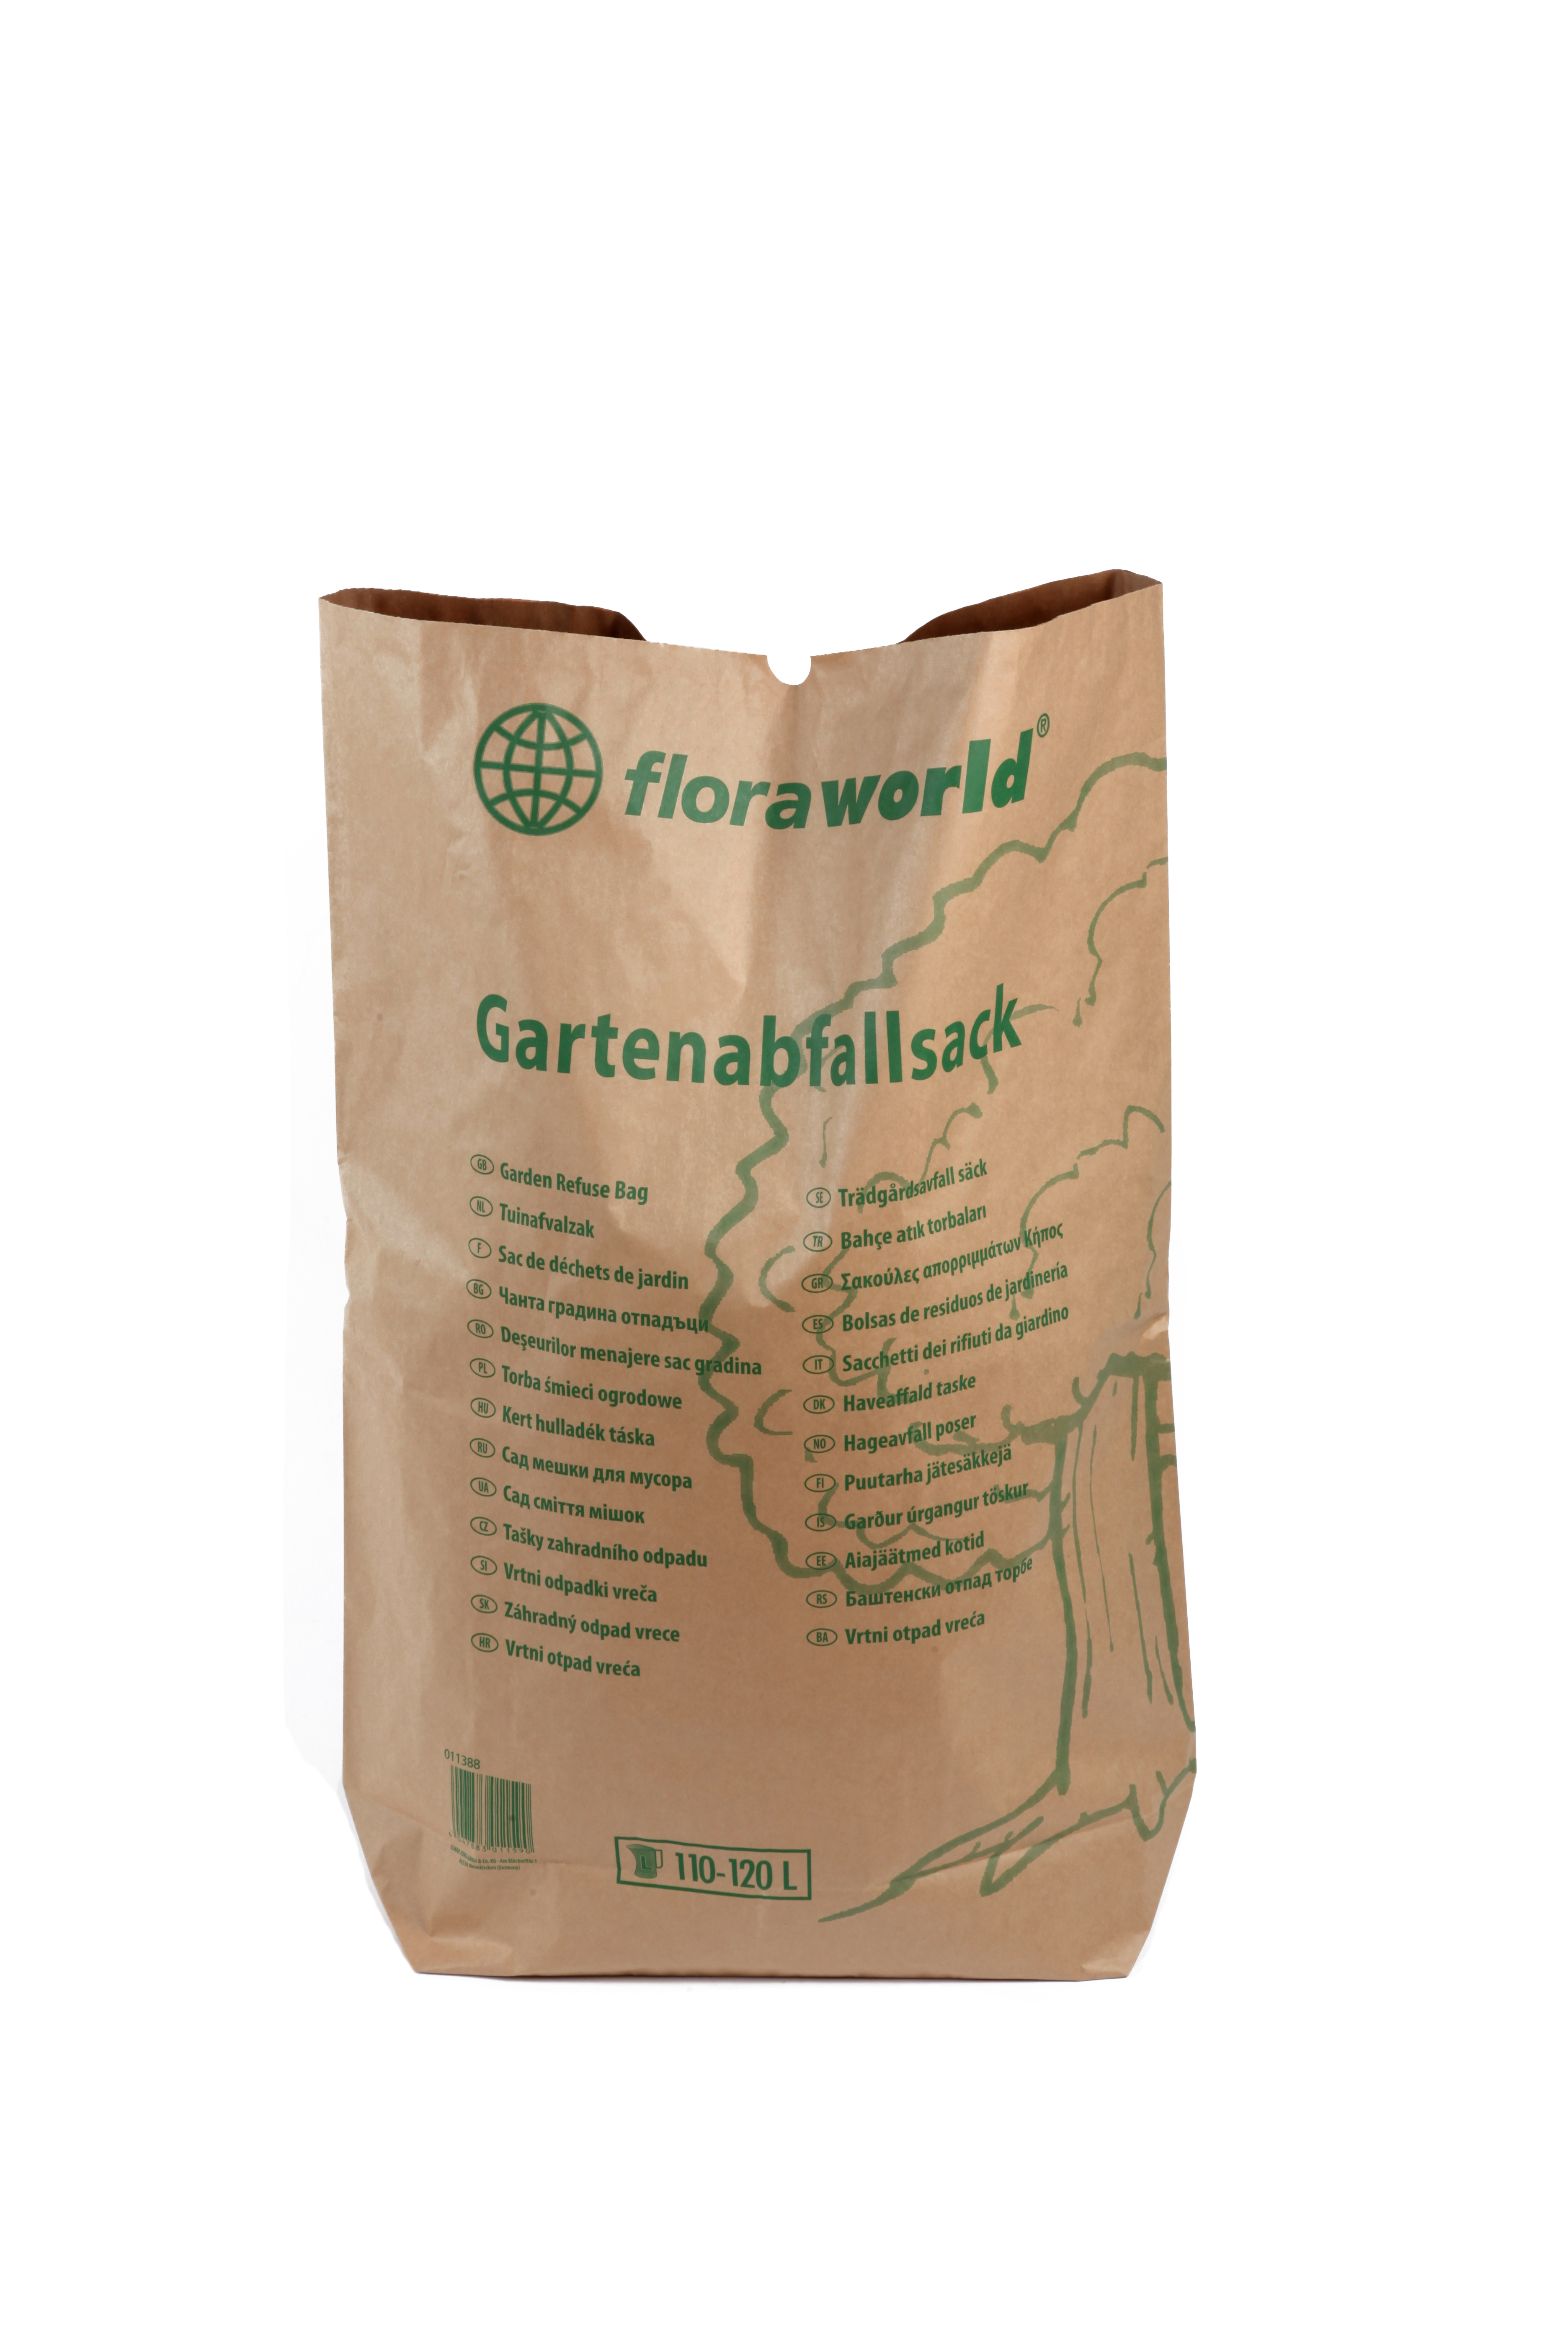 floraworld® Gartenabfallsack 110 - 120 L